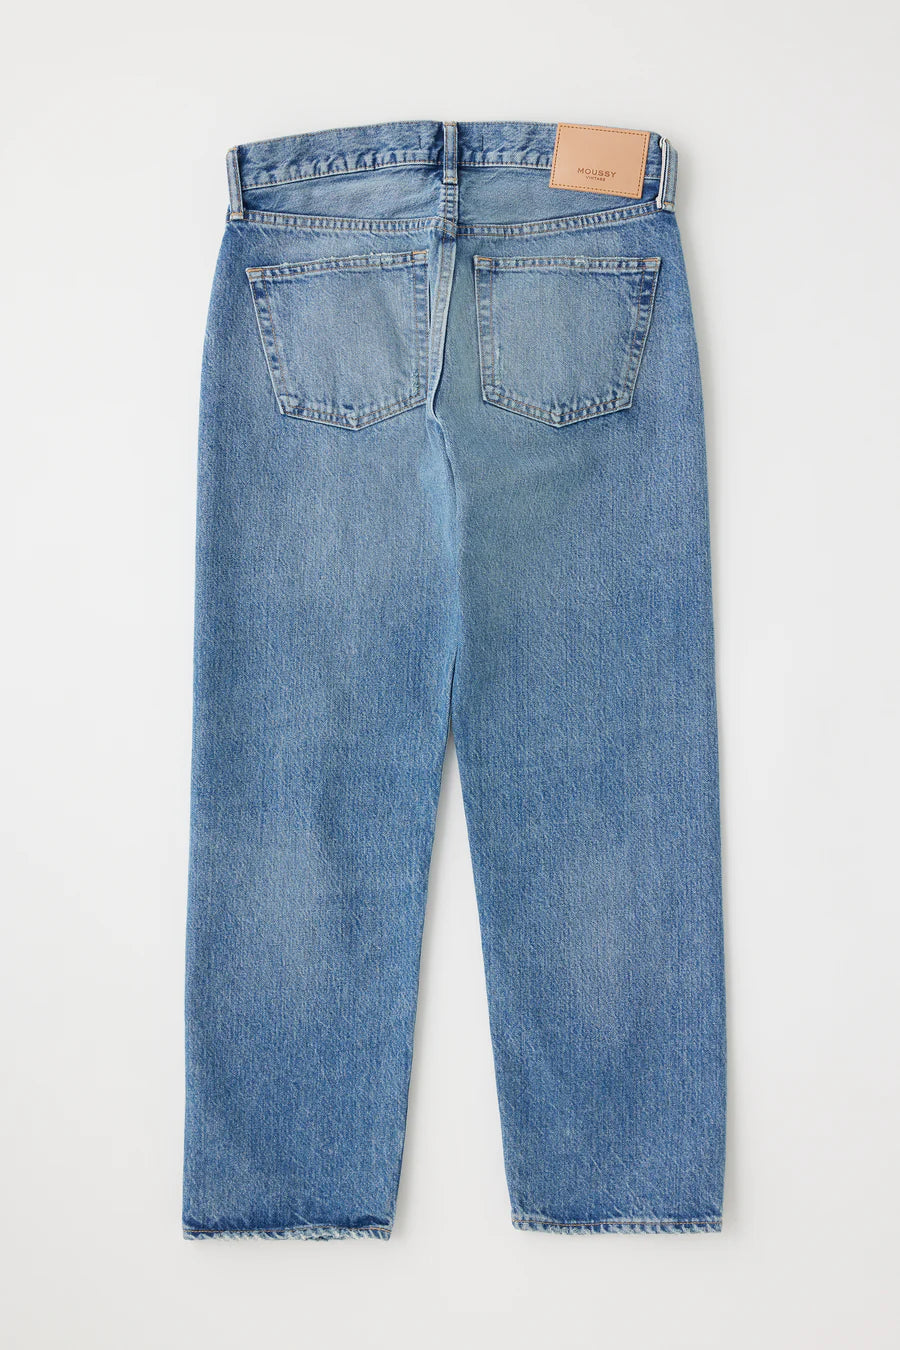 Moussy Vintage Maplecrest Boys Pants Jeans